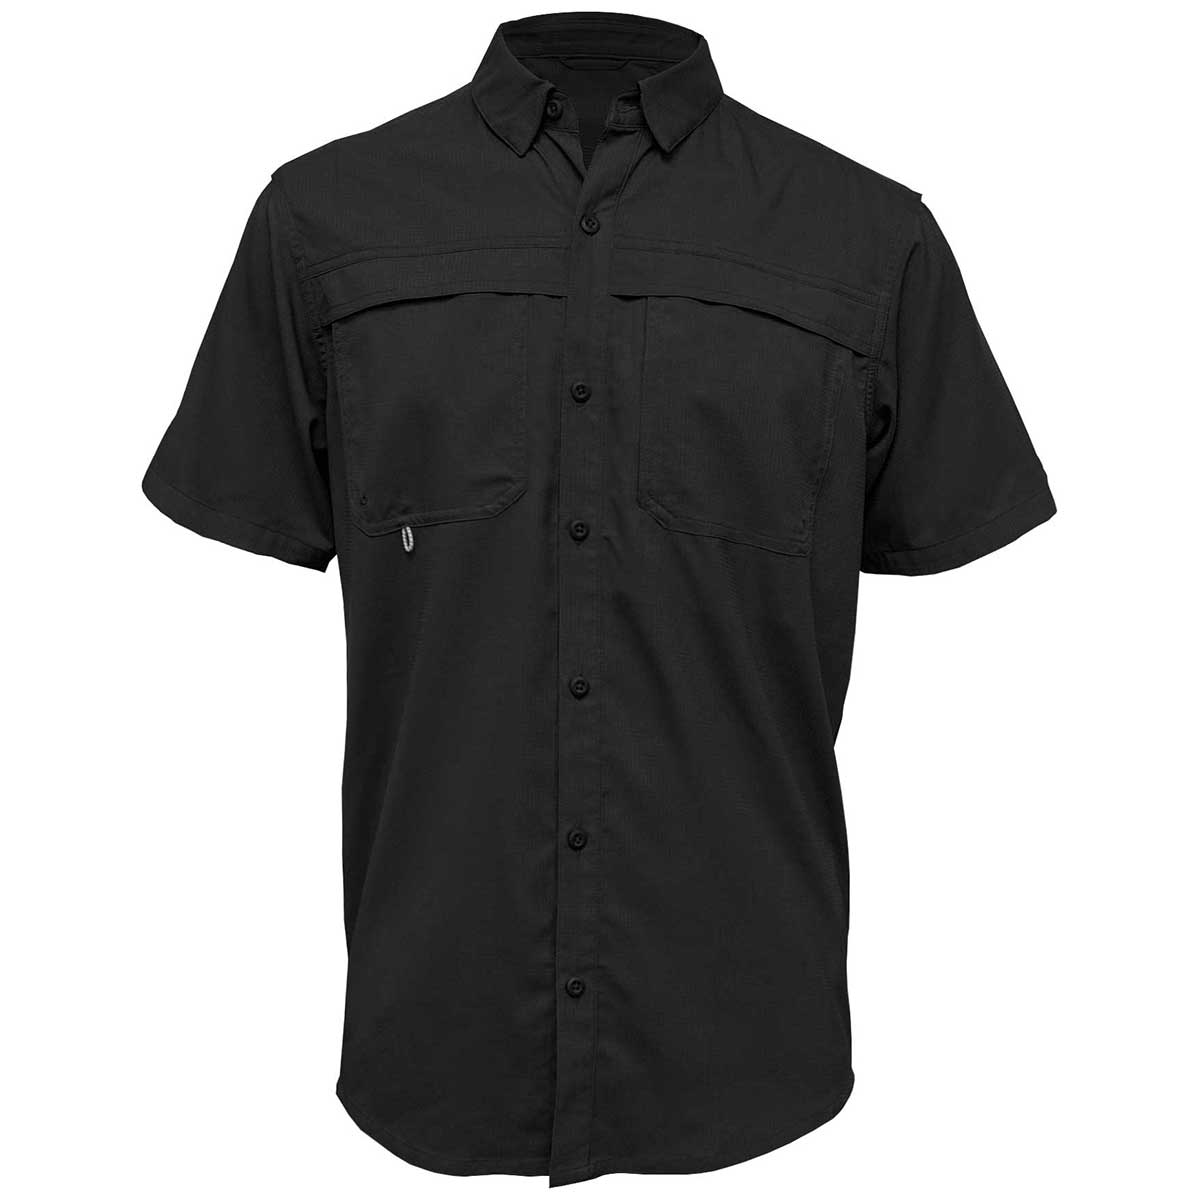 BAW Men's Black Short Sleeve Fishing Shirt - Sample